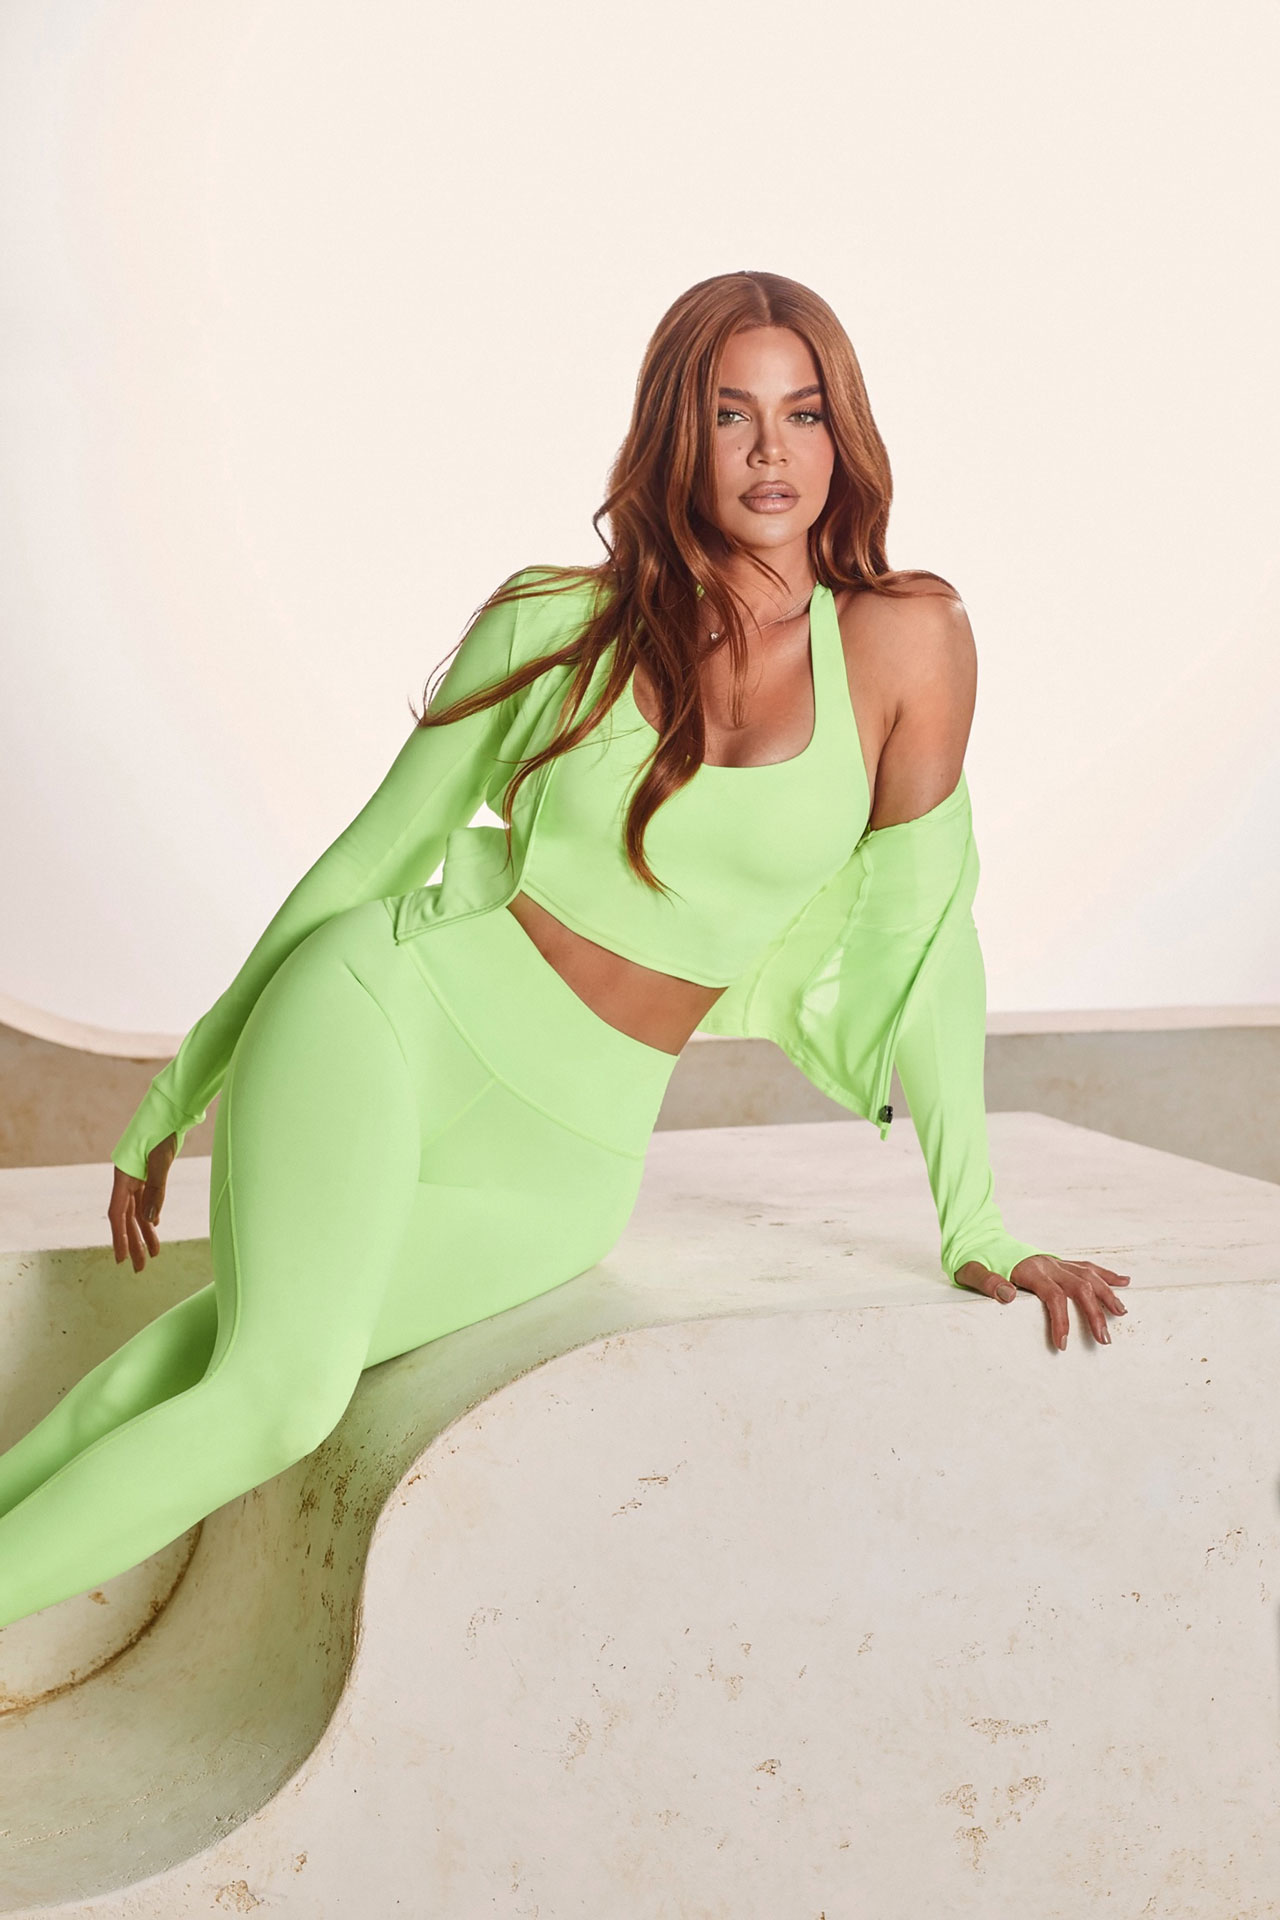 Khloe Kardashian Fabletics third collection green set